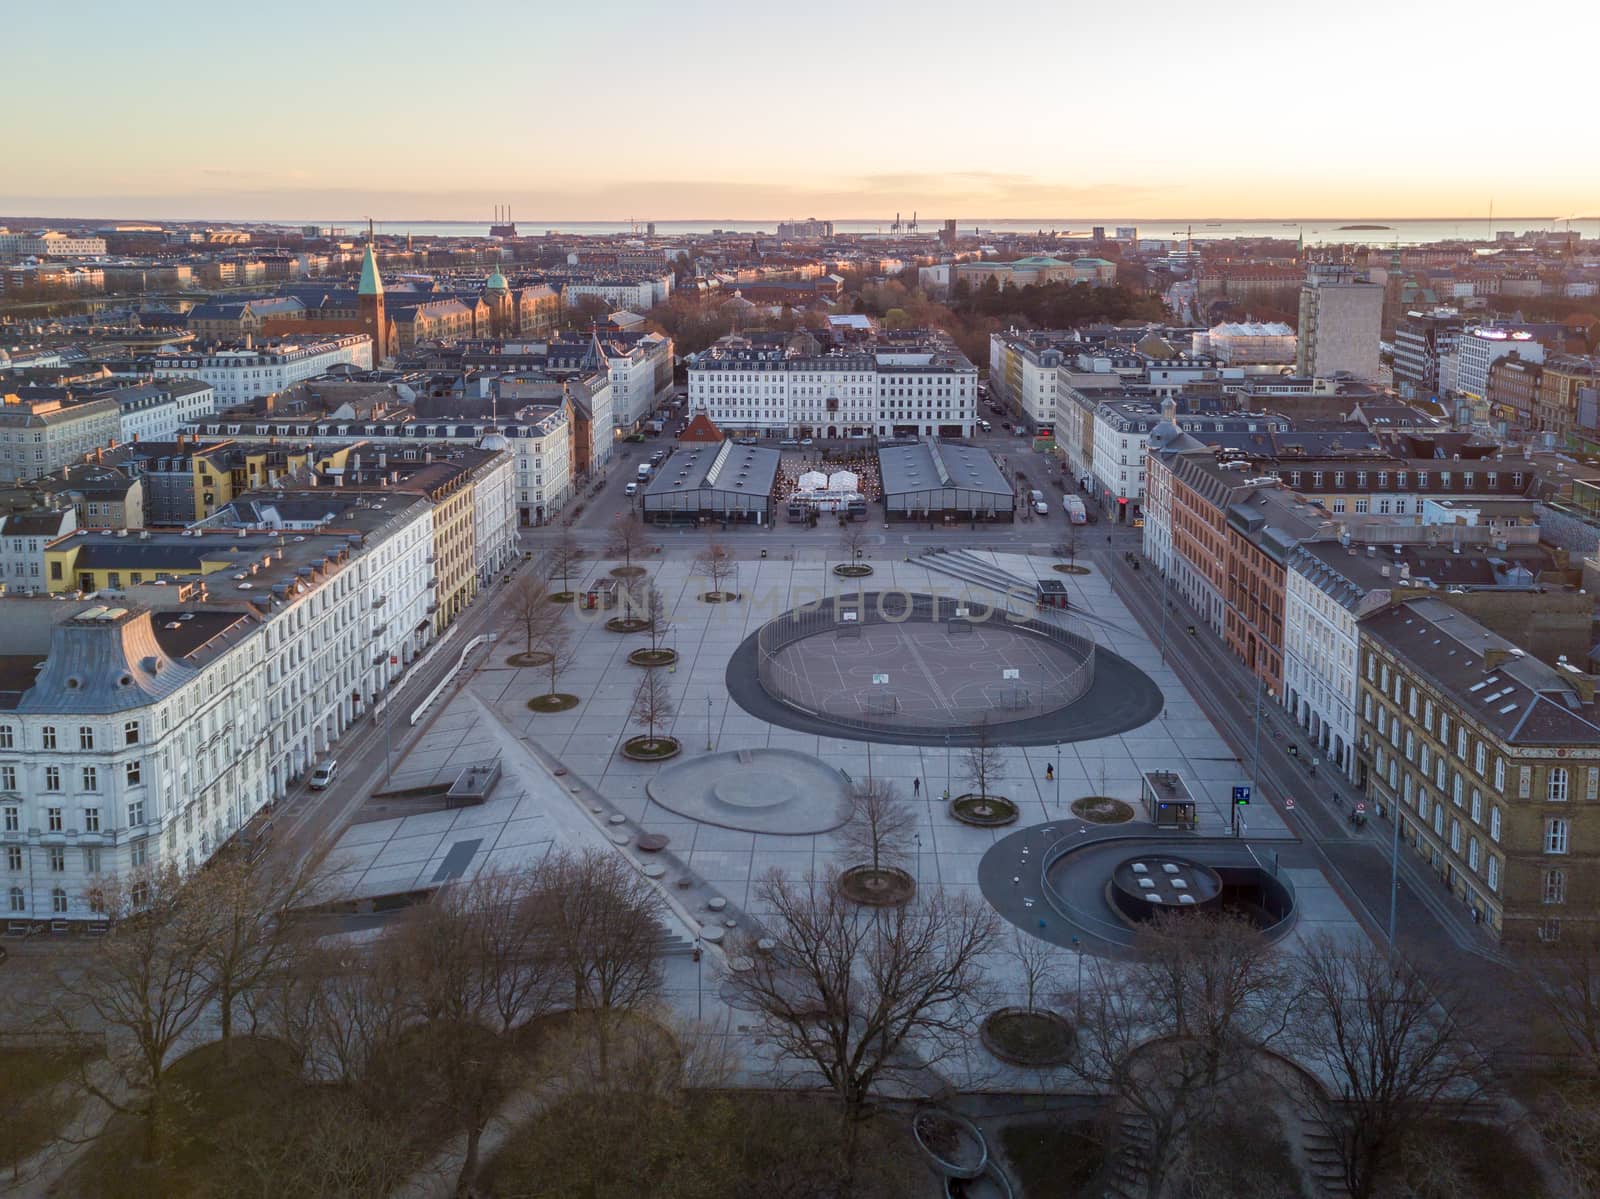 Israels Plads in Copenhagen, Denmark by oliverfoerstner